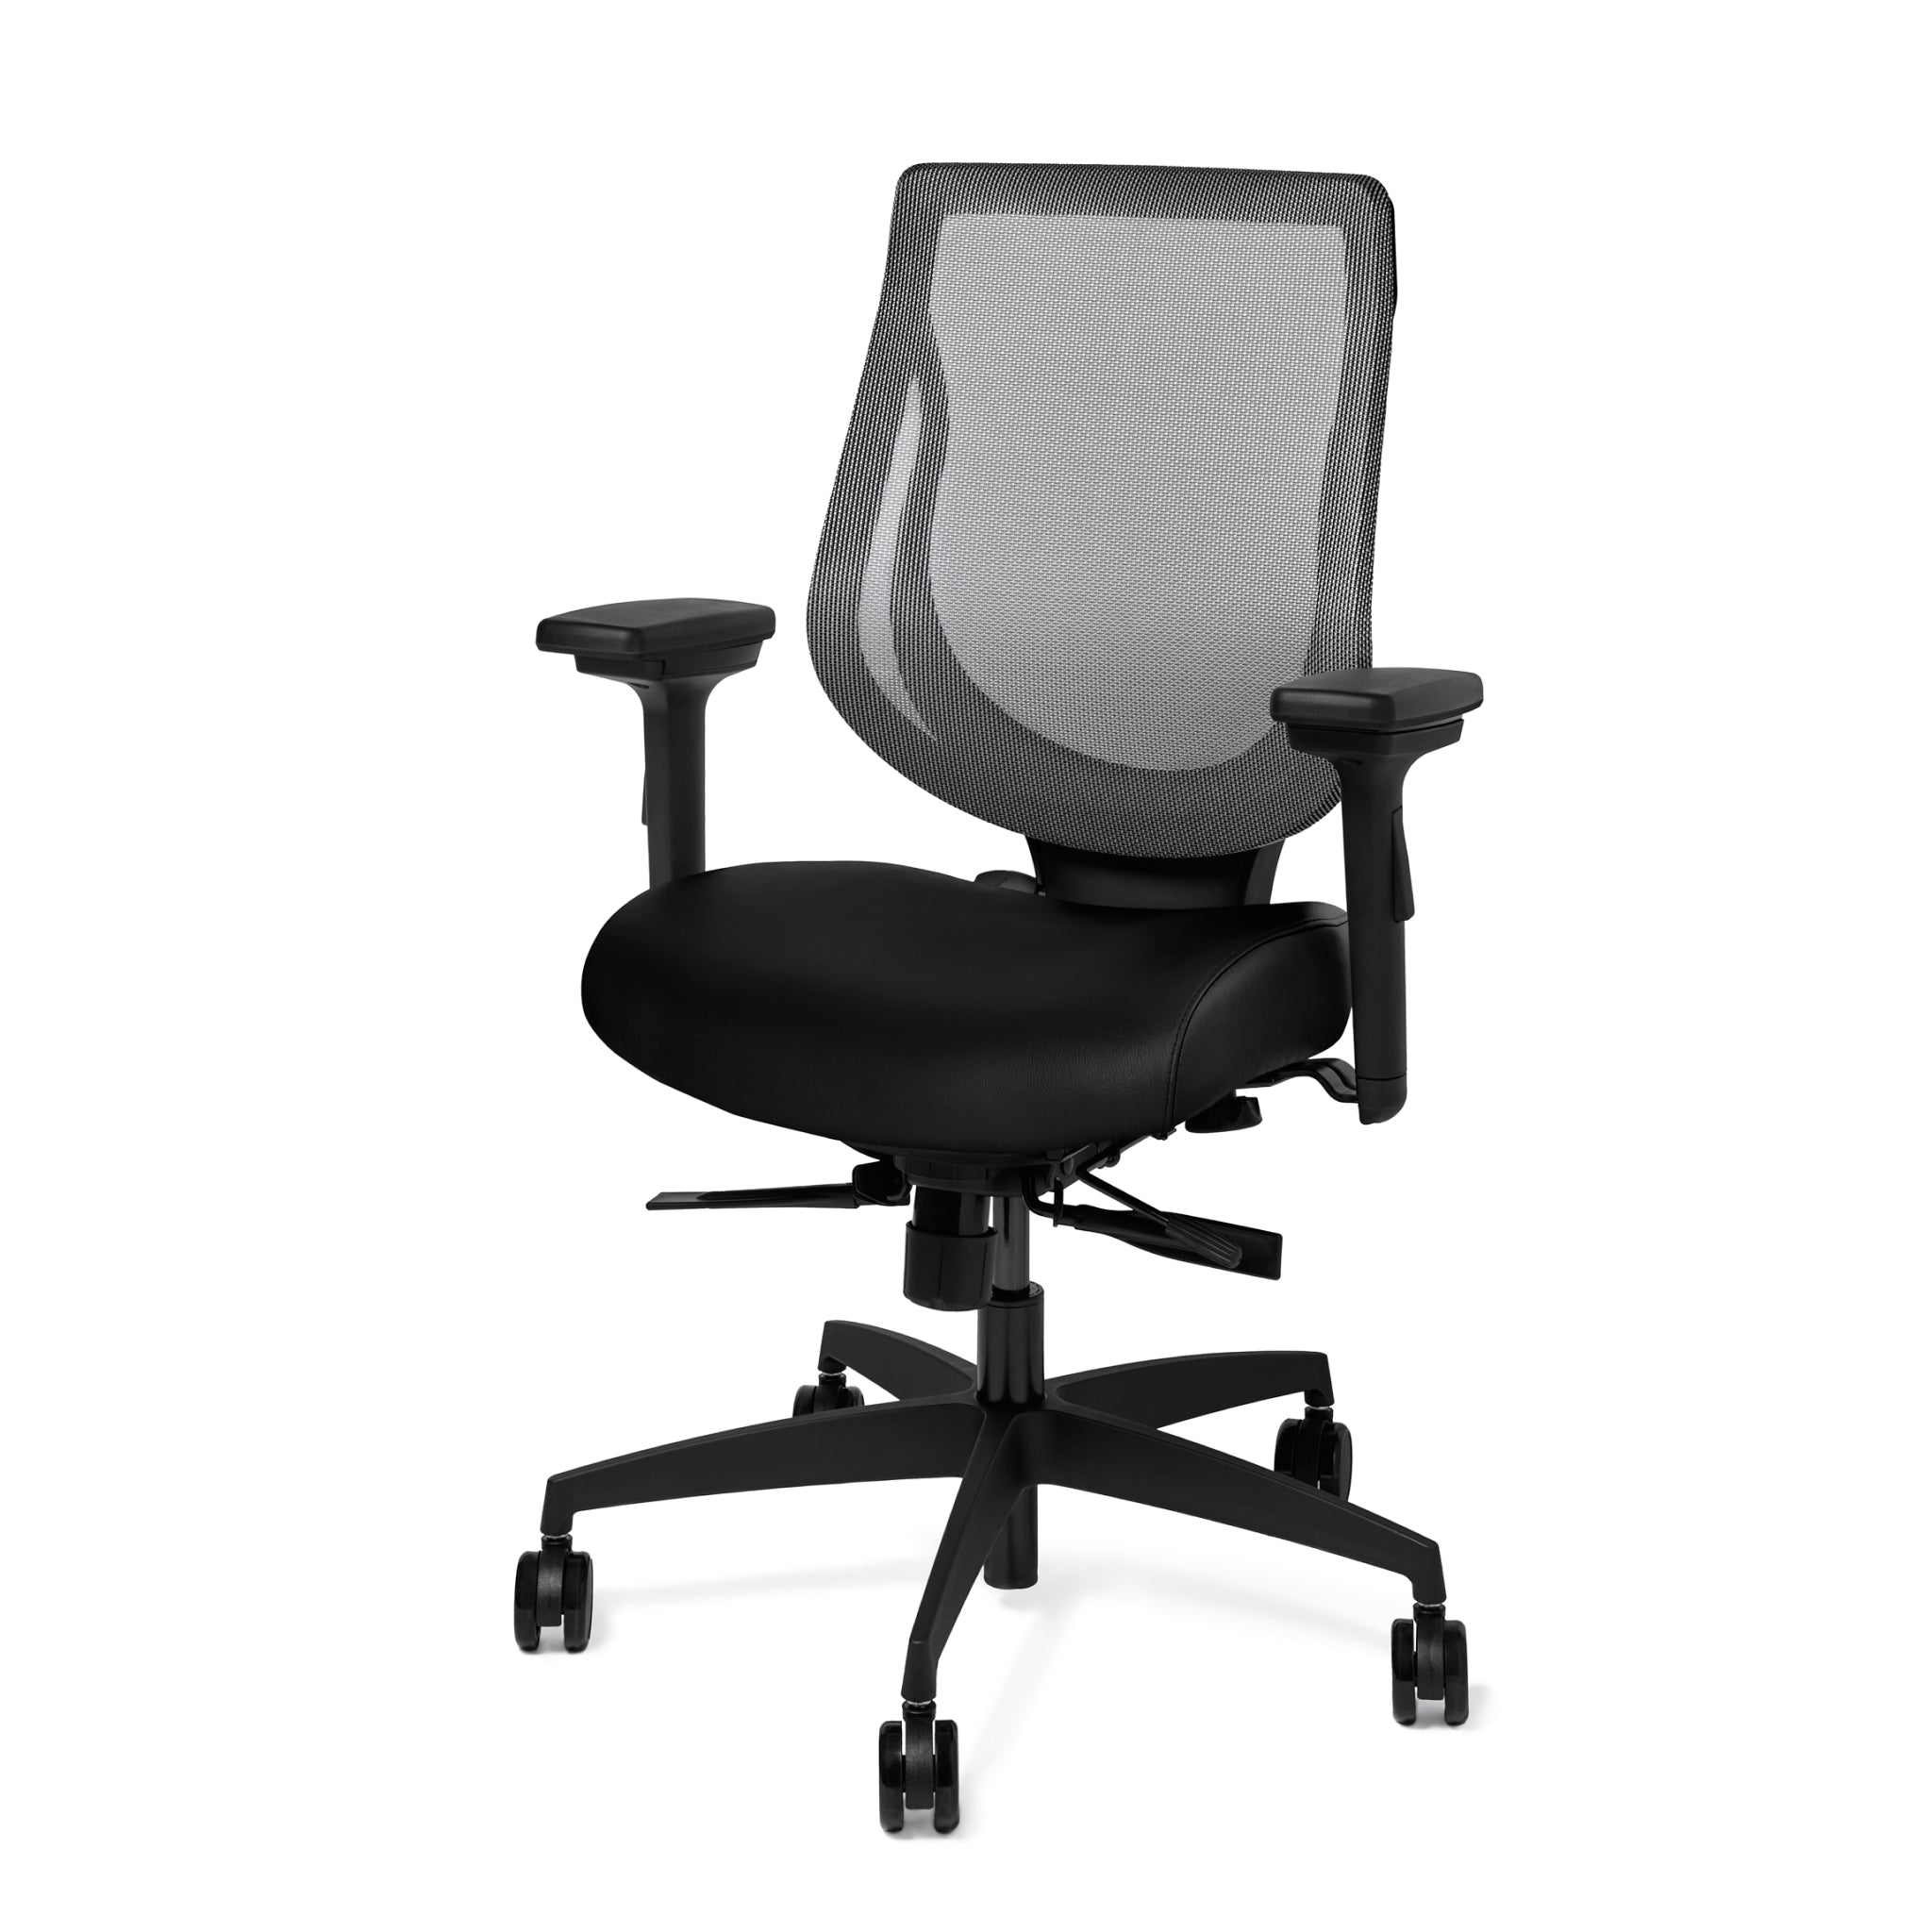 Small YouToo Ergonomic Chair - Black-Stone – Black - Noir-Stone – Black